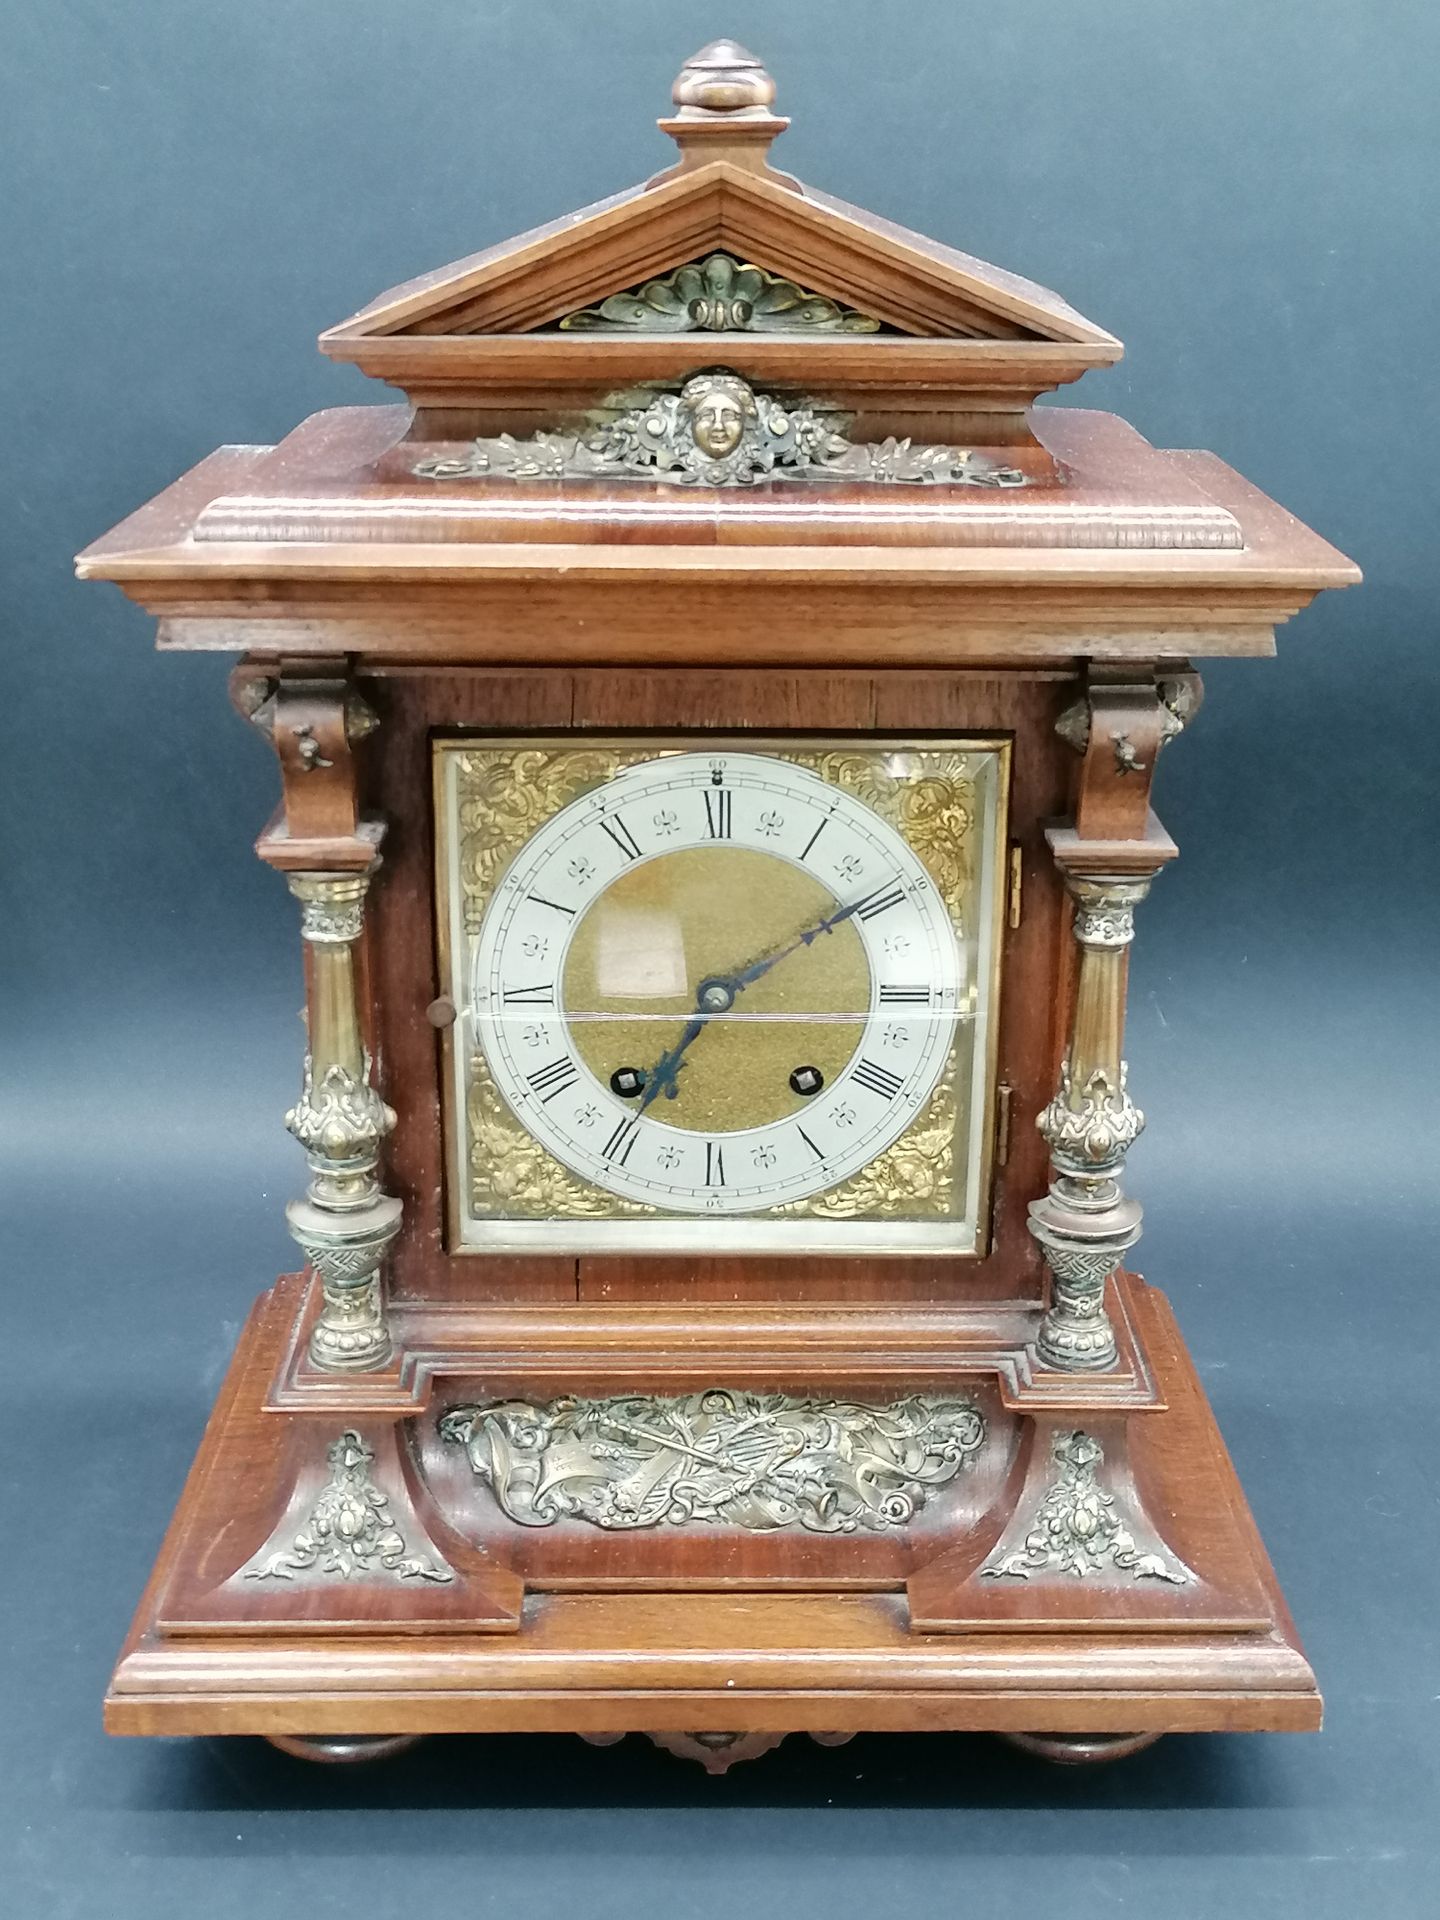 Null 表钟

机芯有两个风铃，木质雕花盒和镀金铜质装饰品。

珐琅质表盘上有罗马数字。

H.50 L.34,5 cm

有待修订的机制